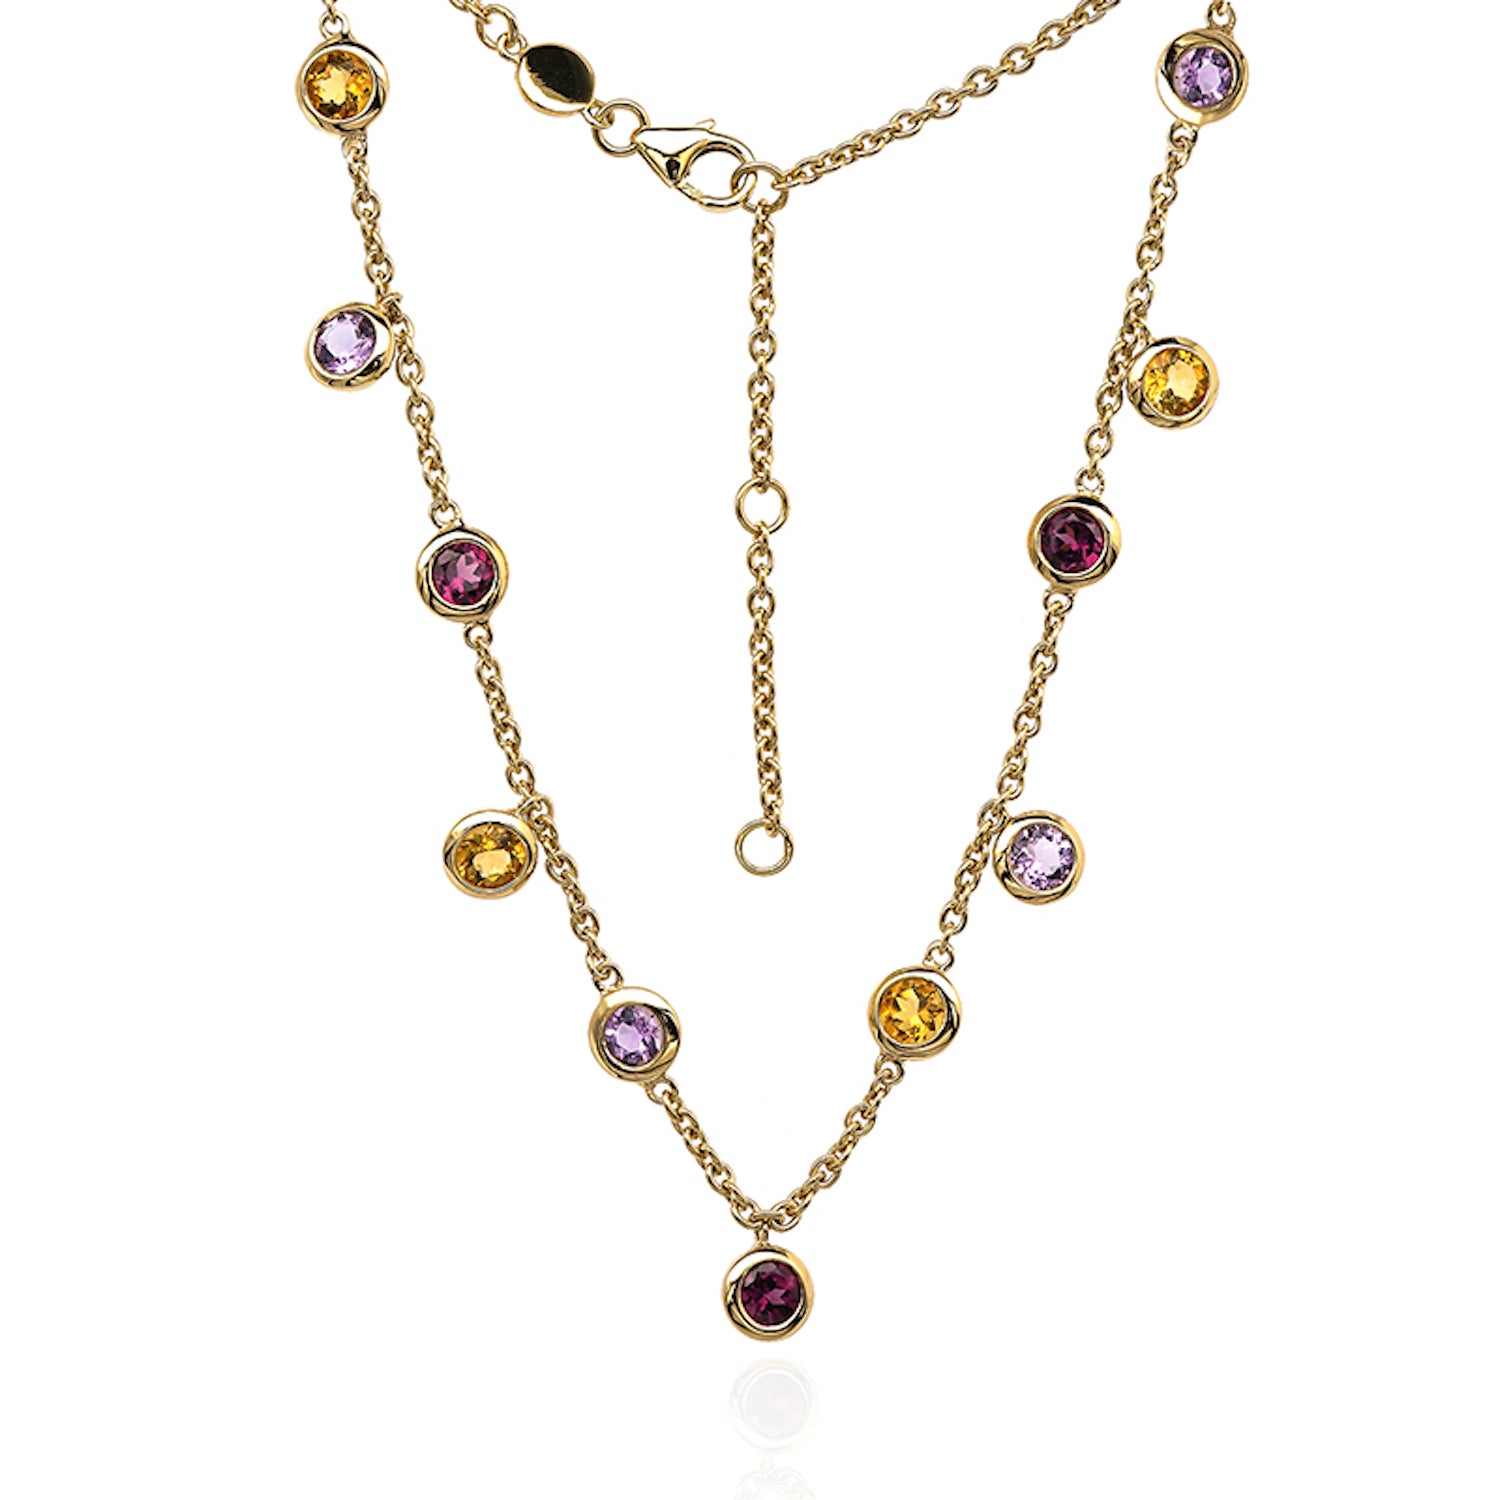 Marbella gemstone pendant necklace with amethyst, citrine and rhodolite garnet.